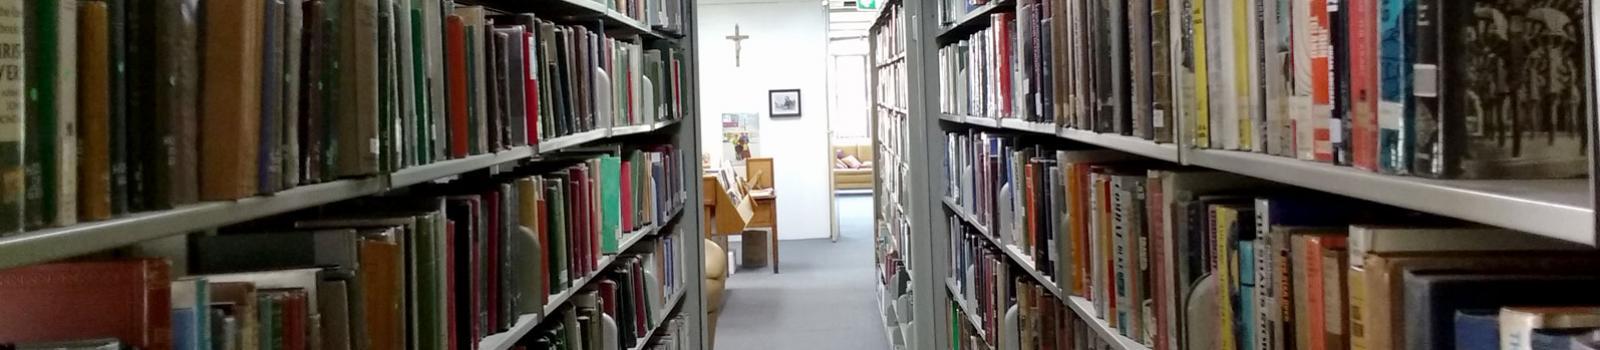 Book shelves at Caroline Chilholm Library